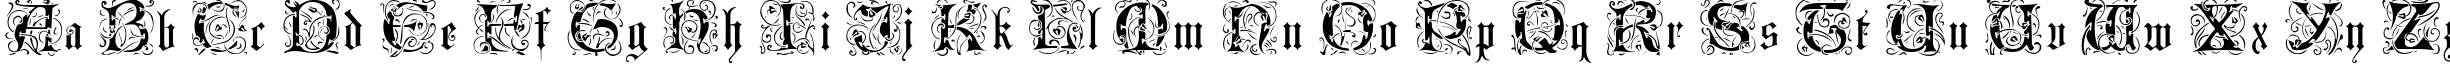 Пример написания английского алфавита шрифтом Lombardina Initial One